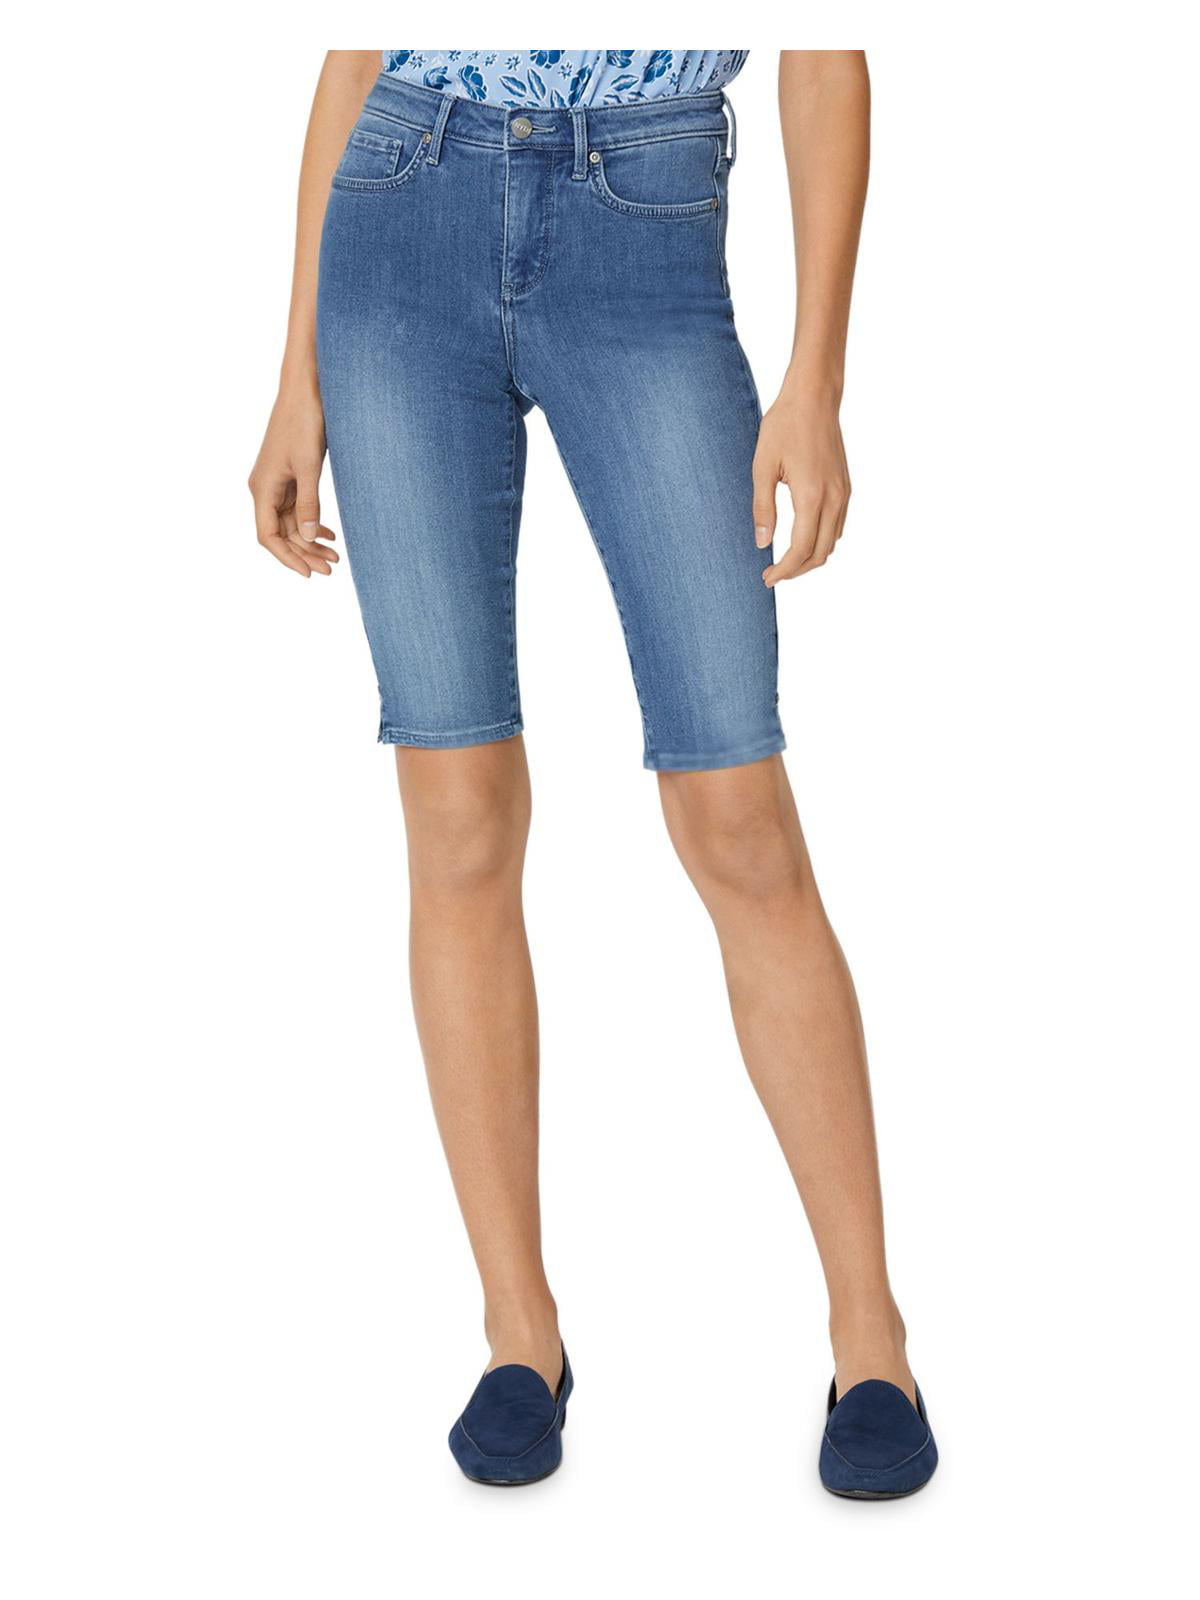 NYDJ Not Your Daughter Jeans Bermuda Premium Denim Cooper shorts 6  8 12 14 16 